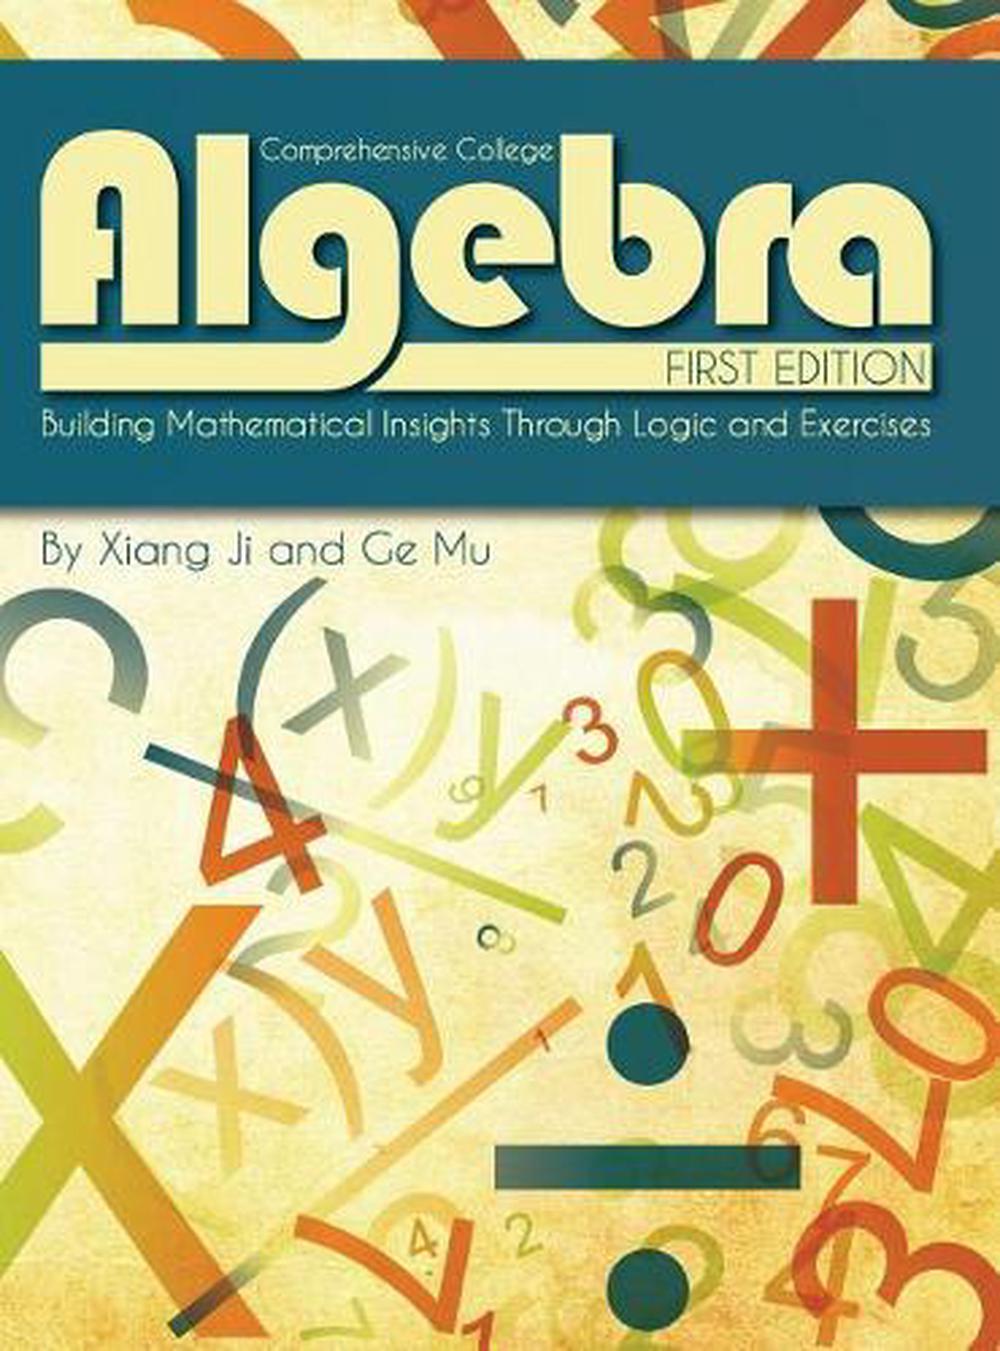 College Algebra Workbook by Ge Mu (English) Hardcover Book Free Shipping! 9781516551477 eBay